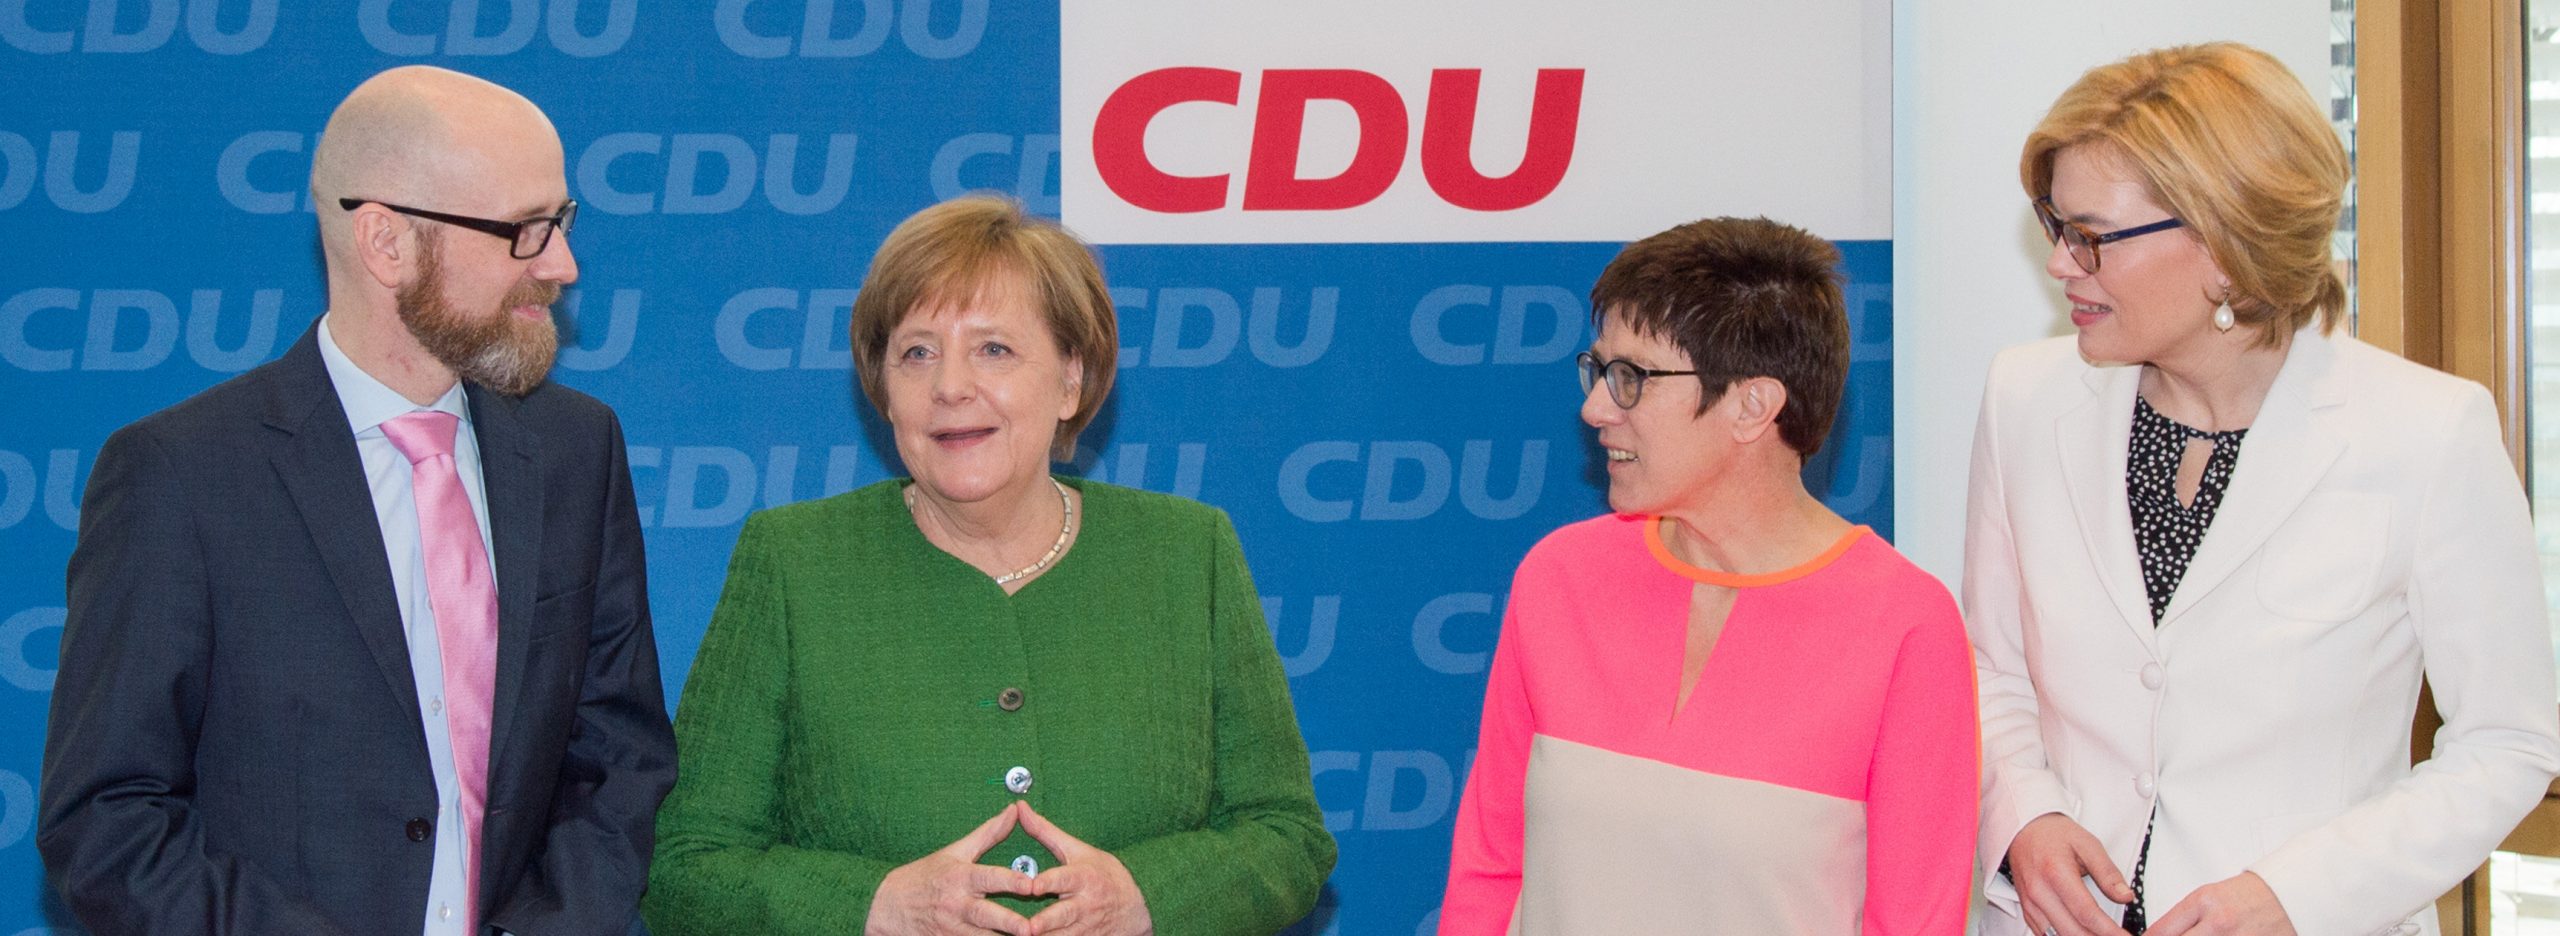 Annegret Kramp-Karrenbauer e Angela Merkel (LaPresse)